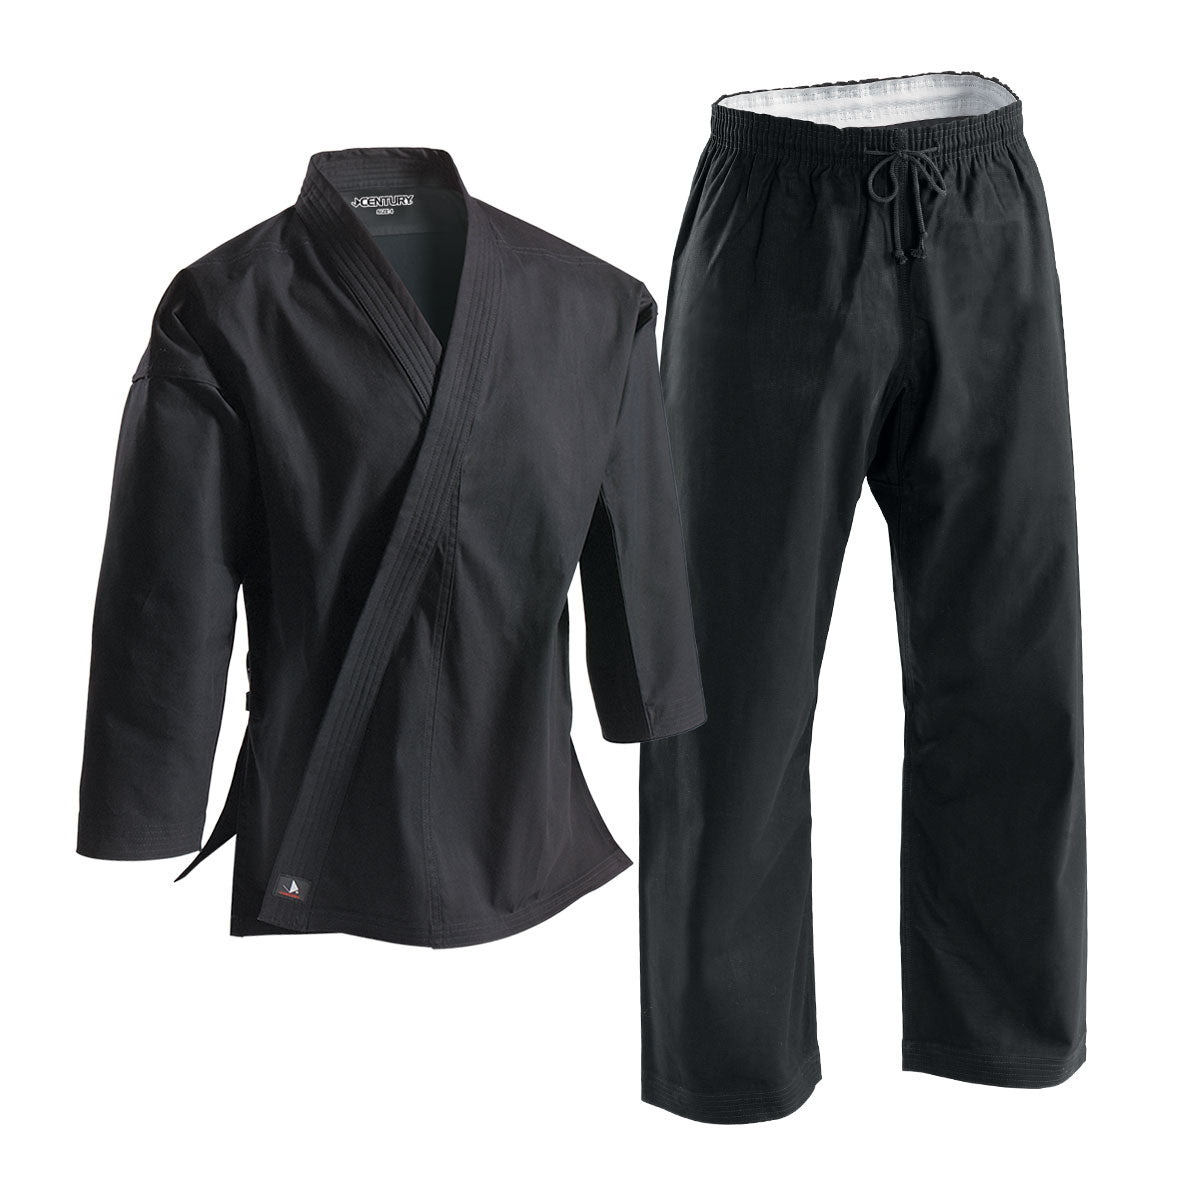 10 oz. Middleweight Brushed Cotton Uniform Black